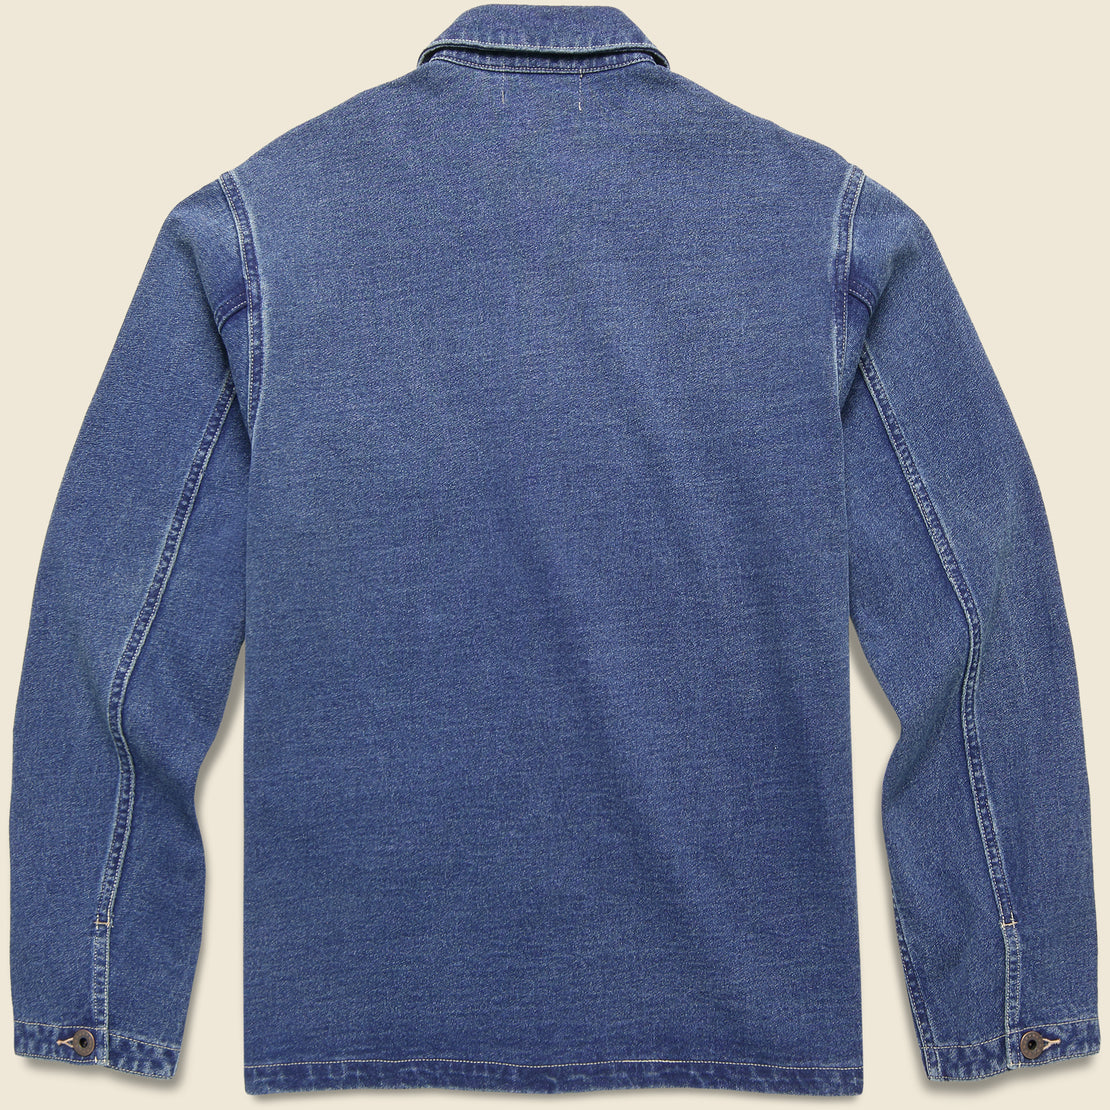 US Missouri Dense Jersey Jacket - Indigo - RRL - STAG Provisions - Outerwear - Shirt Jacket